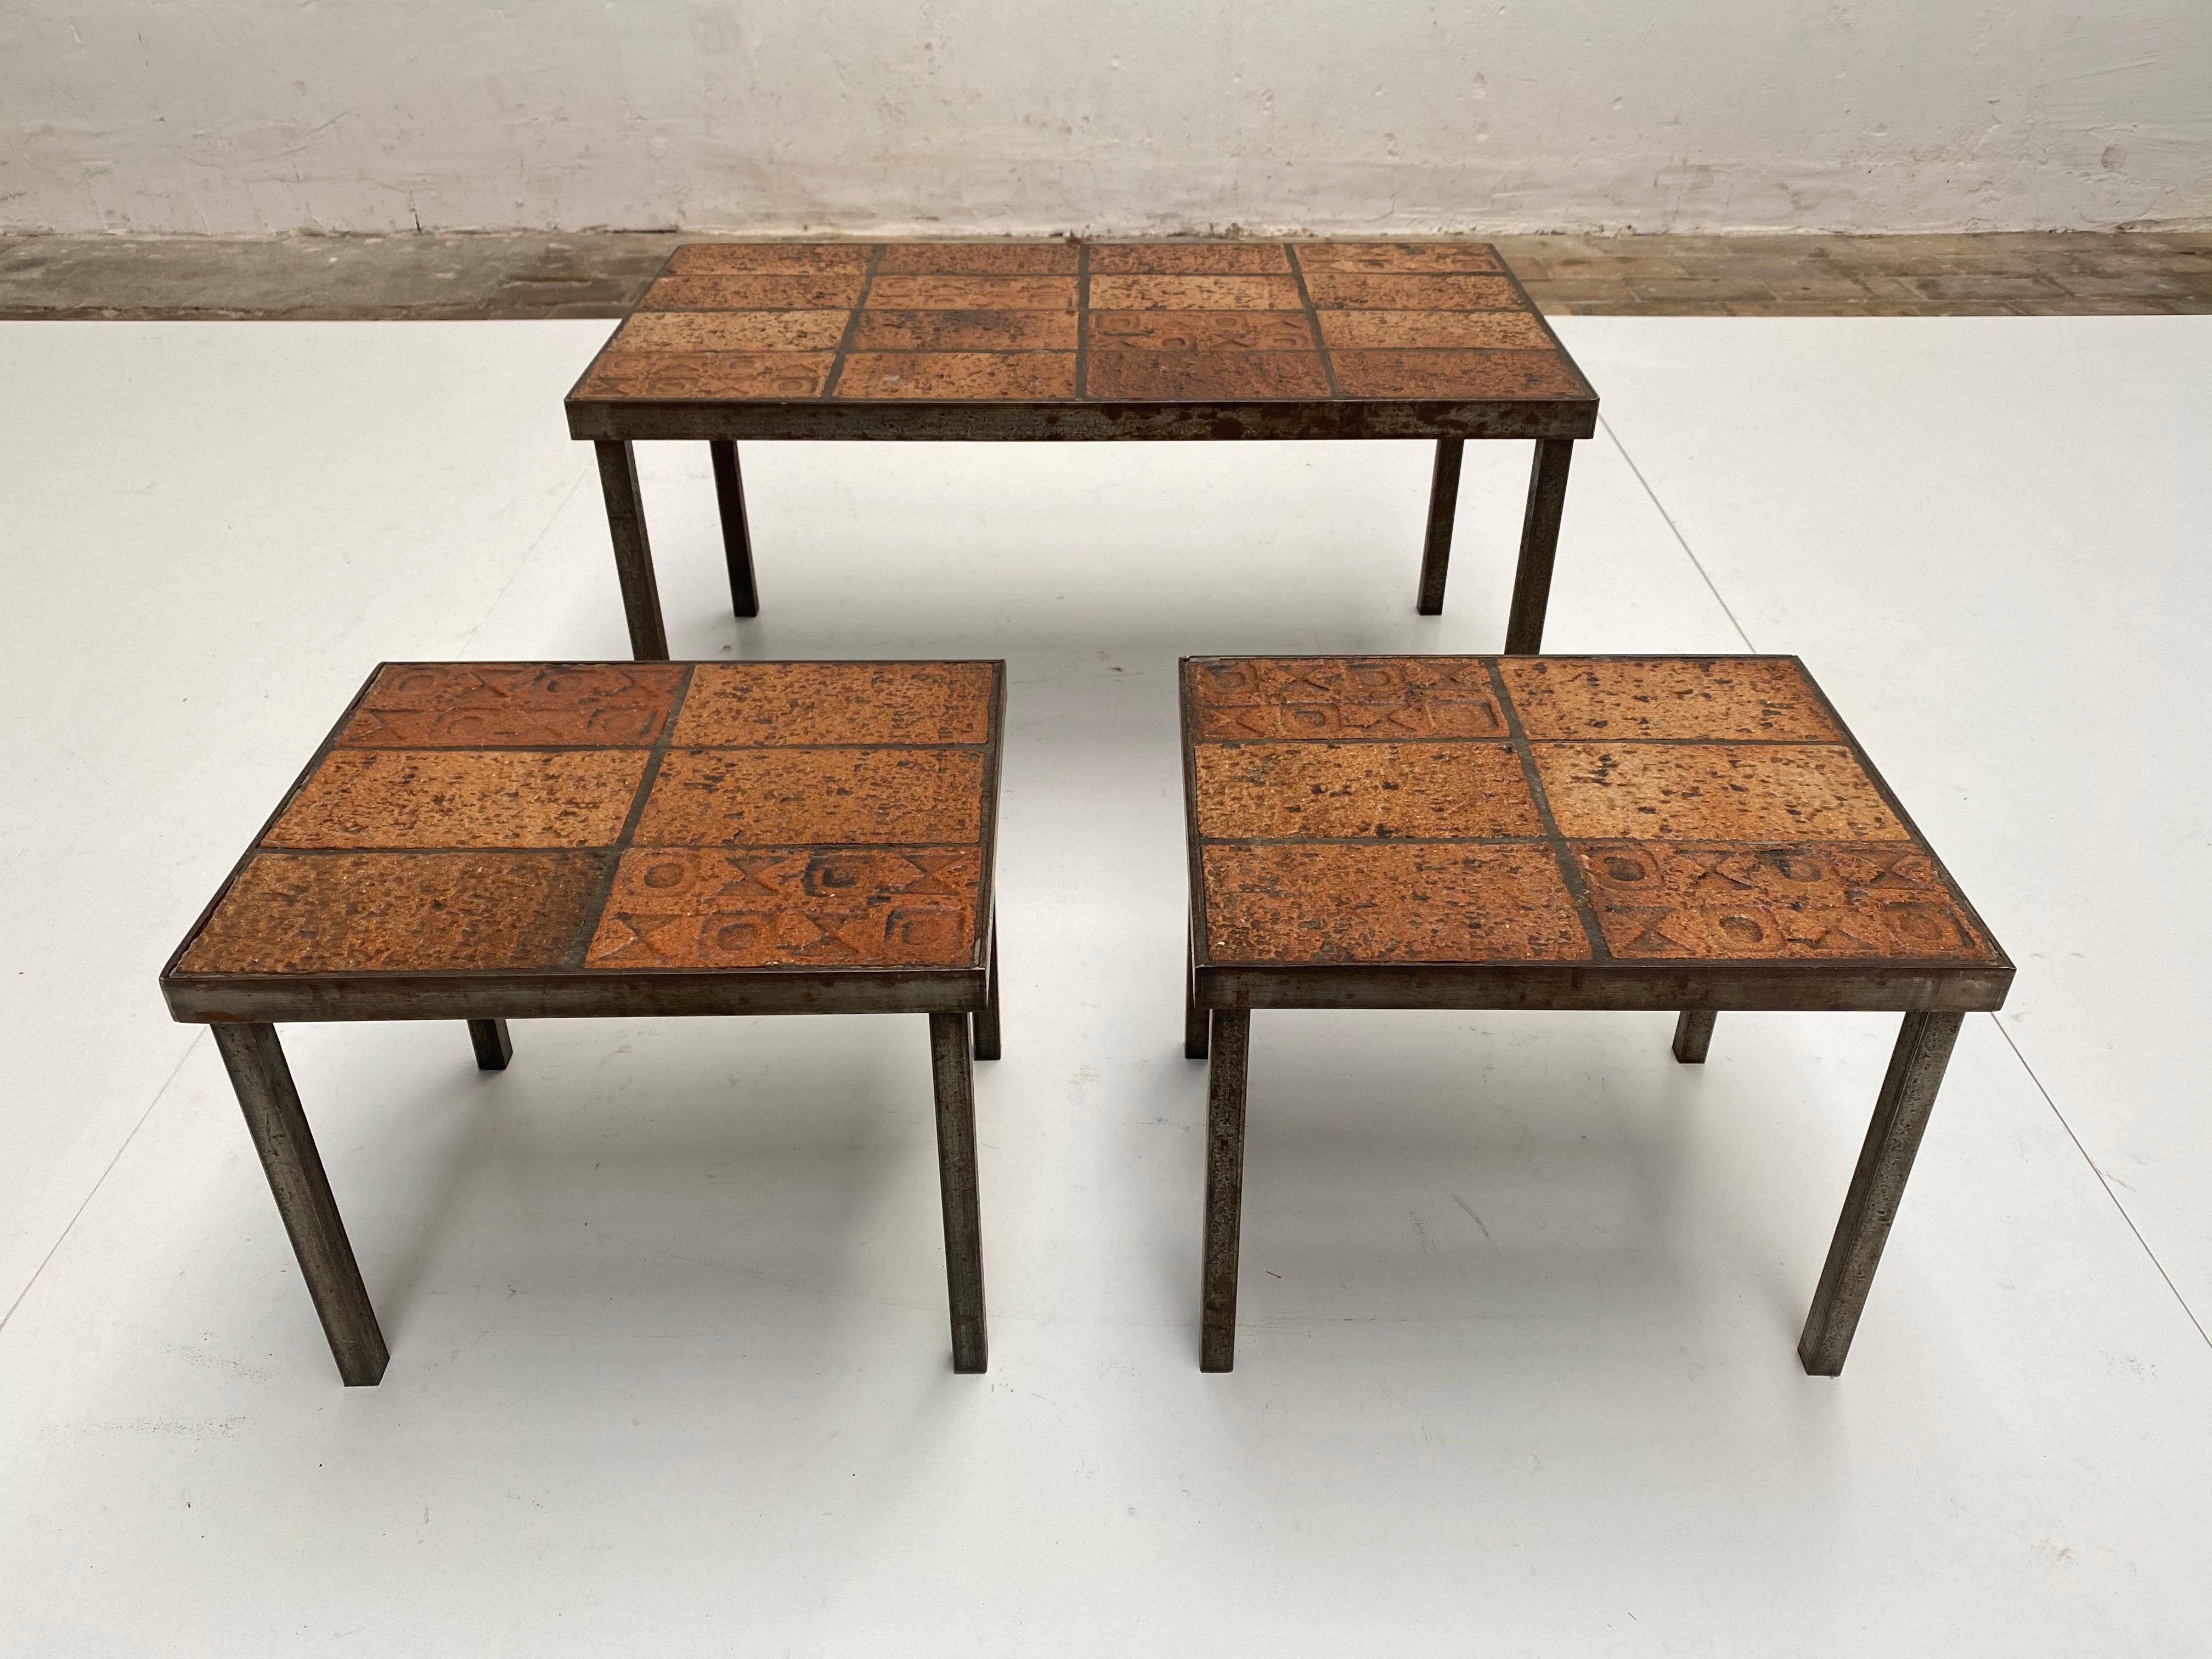 Brutalist Nesting Tables Belgium 1970s Solid Steel and Ceramic Art Work Tiles For Sale 5